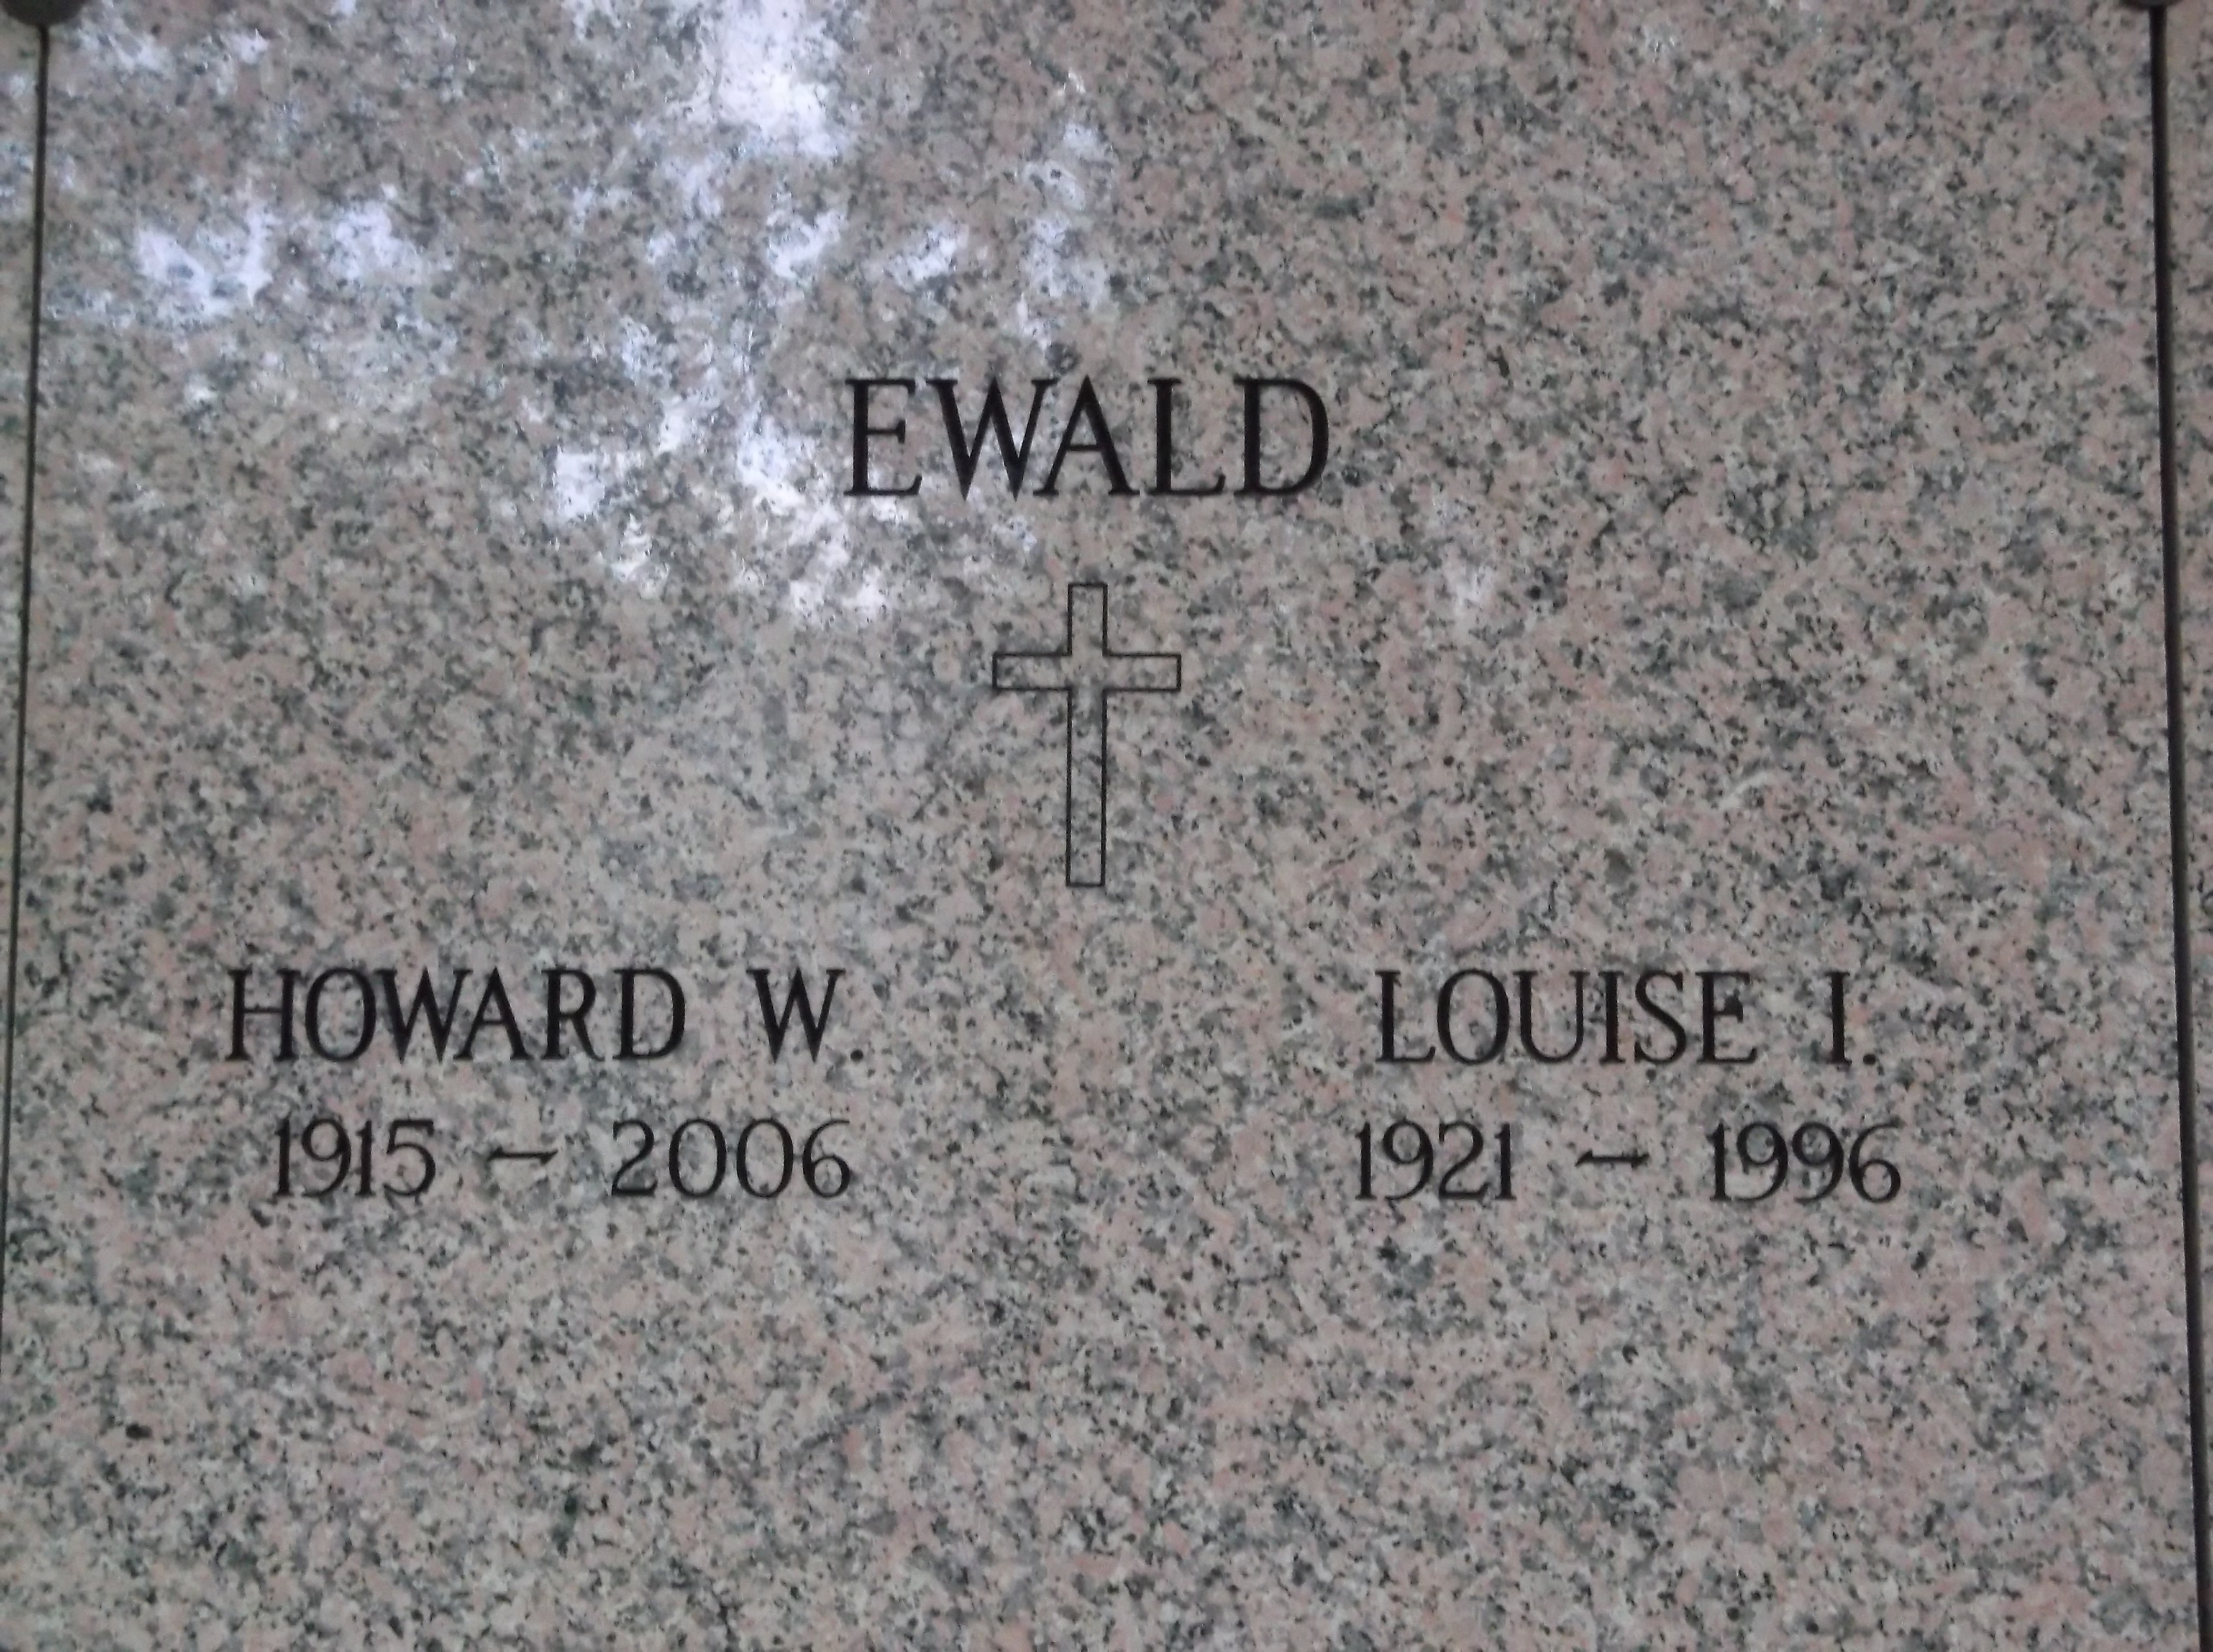 Howard W Ewald